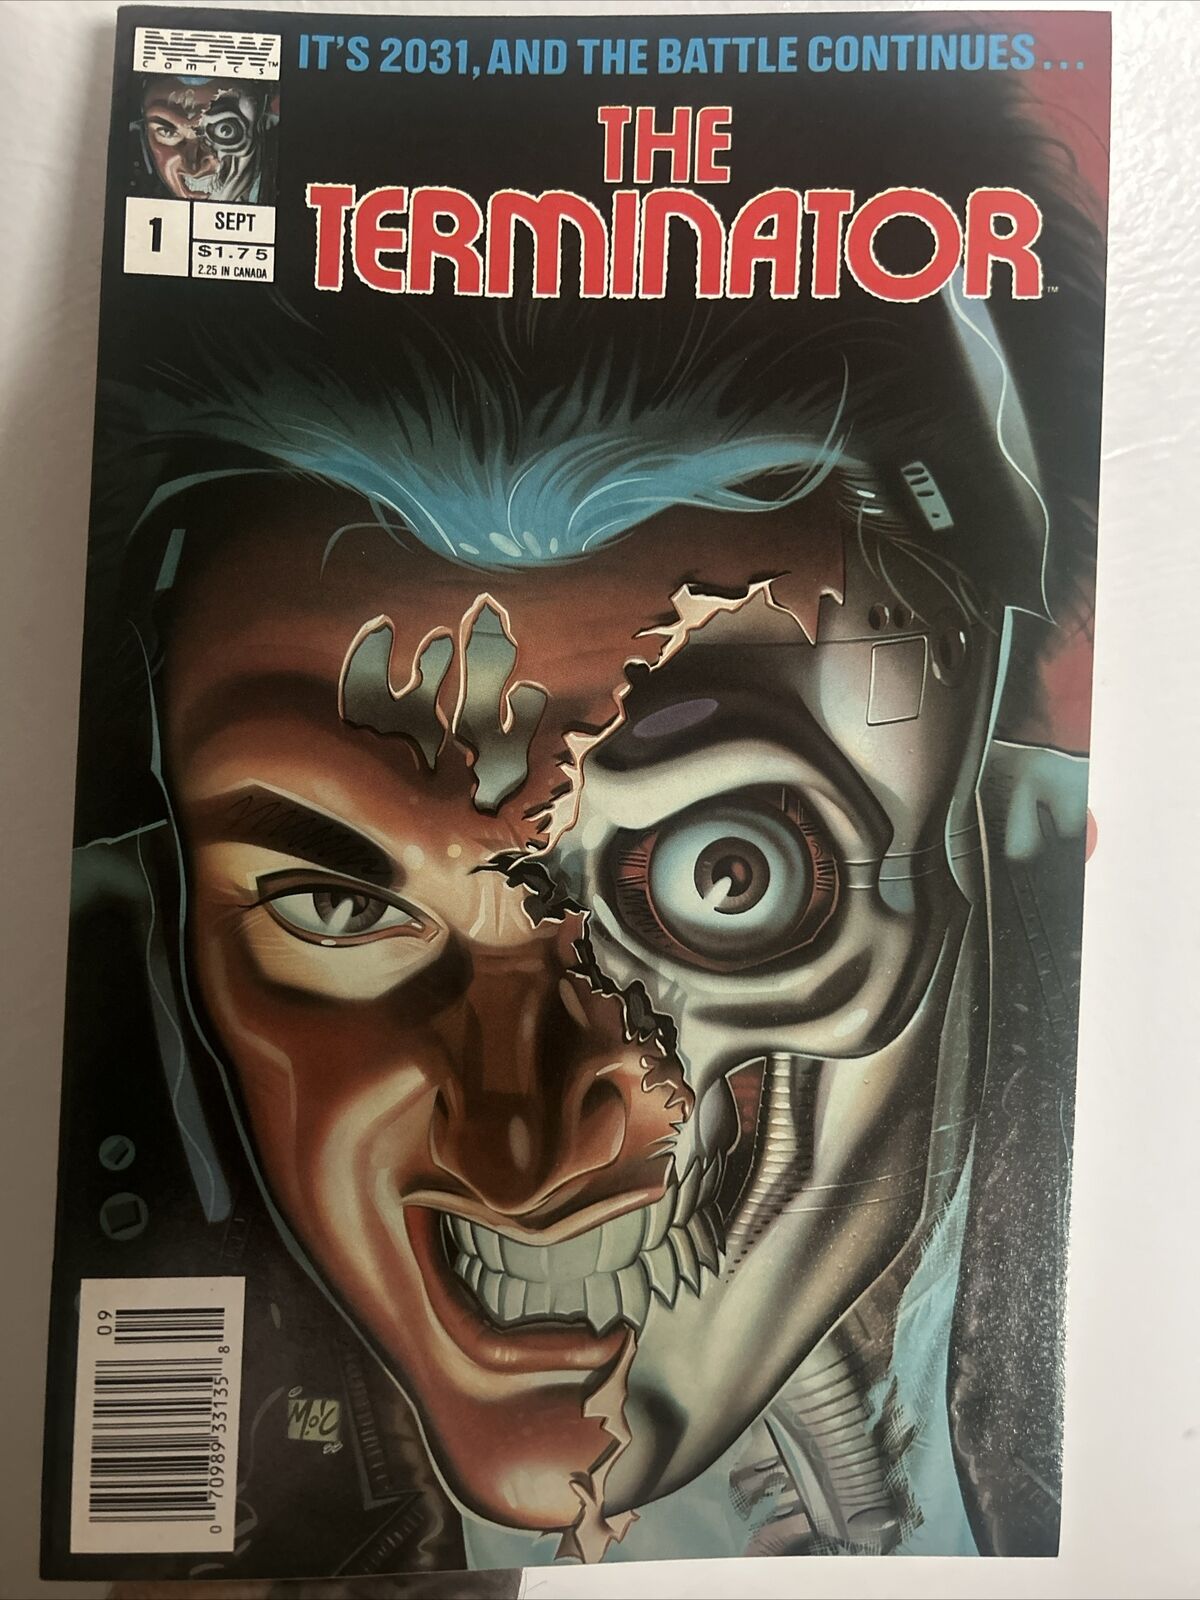 The Terminator #1 (NOW Comics, September 1988)